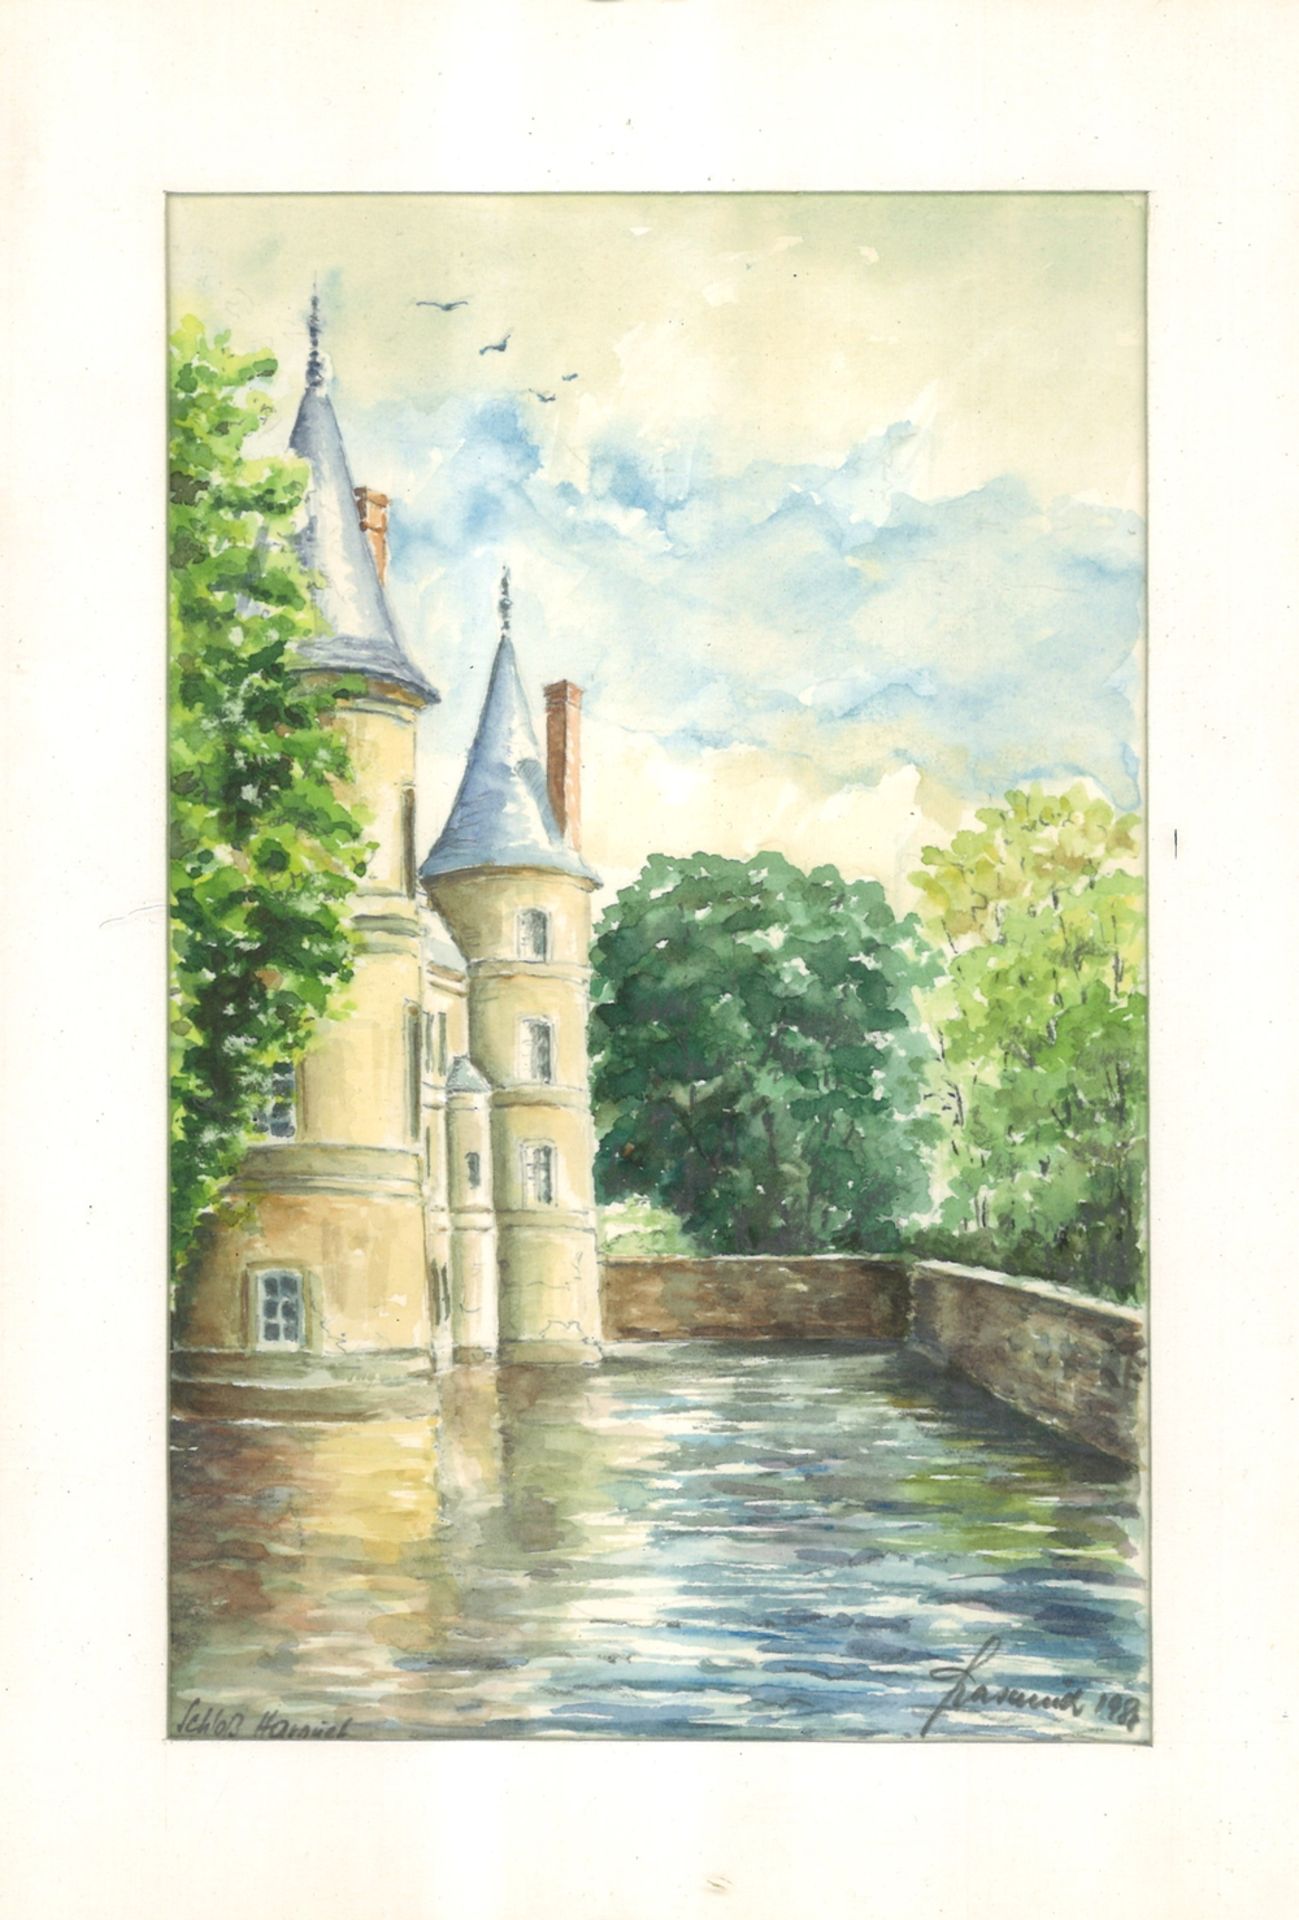 Aquarell "Schloss Haroué" hinter Glas gerahmt, unleserliche Signatur. Gesamtmaße: Höhe ca. 28 cm,